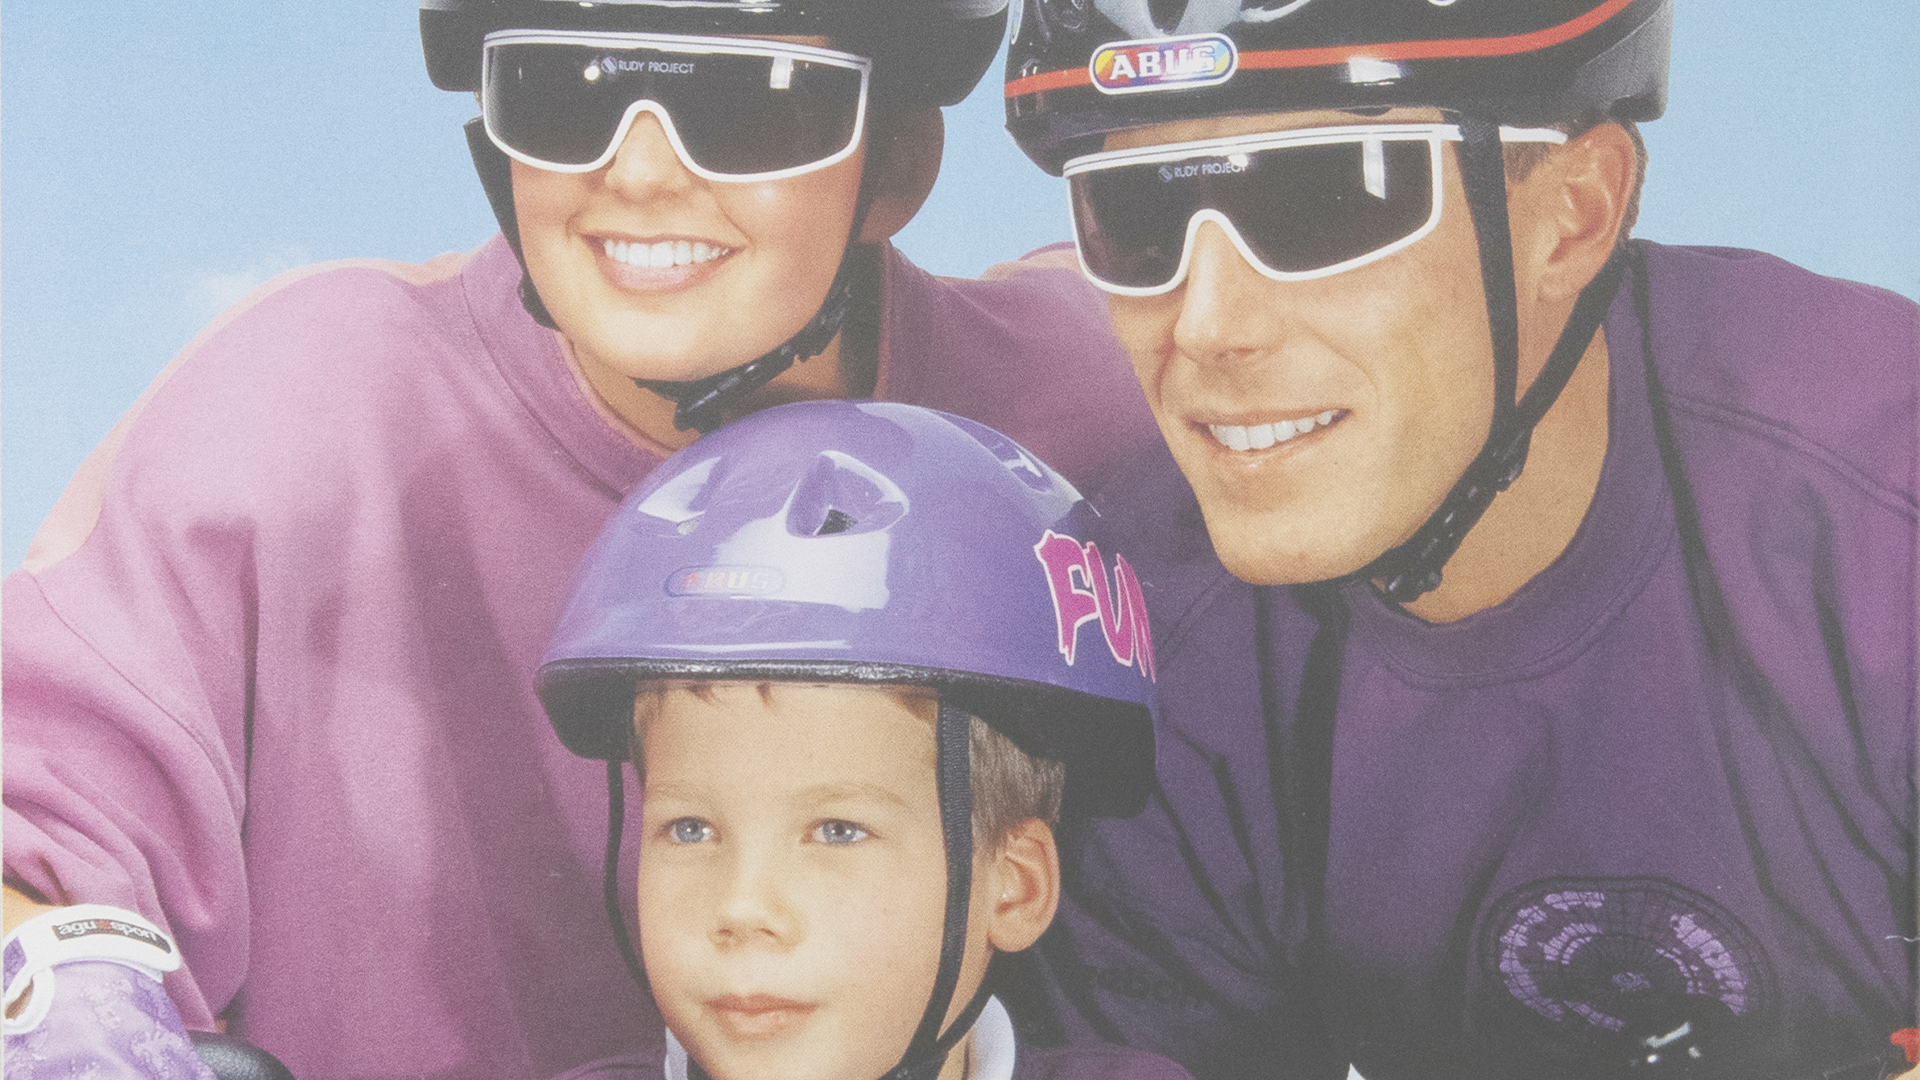 Un uomo e due bambini con i caschi da bici ABUS © ABUS